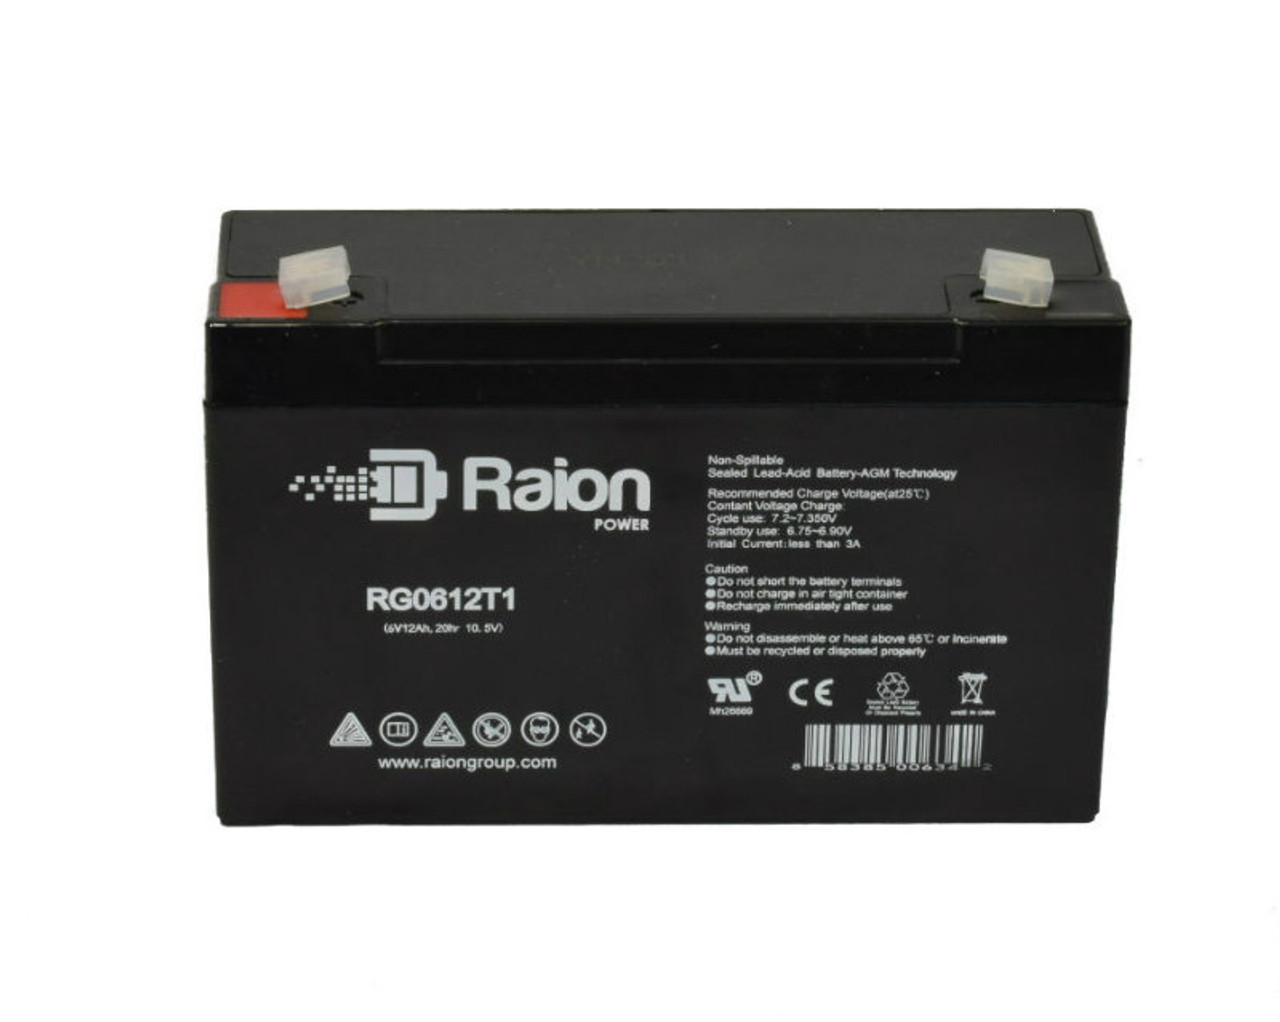 Raion Power RG06120T1 Replacement Battery Cartridge for APC AP 550ES